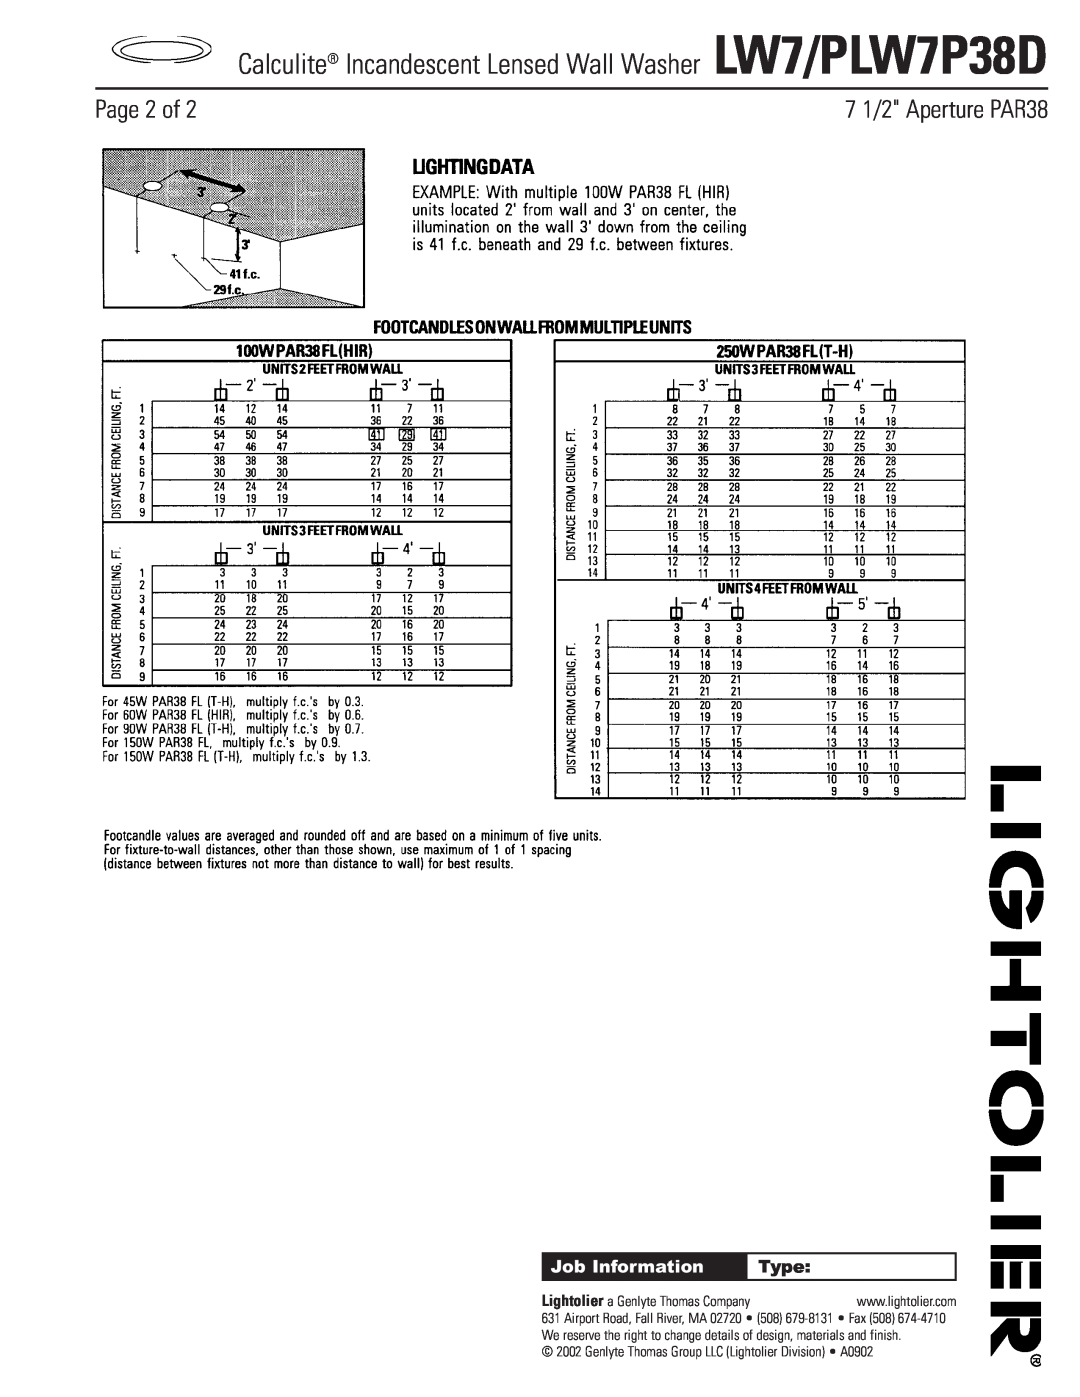 Lightolier LW7/PLW7P38D manual Page 2 of, 7 1/2 Aperture PAR38, Job Information, Type, Lightolier a Genlyte Thomas Company 